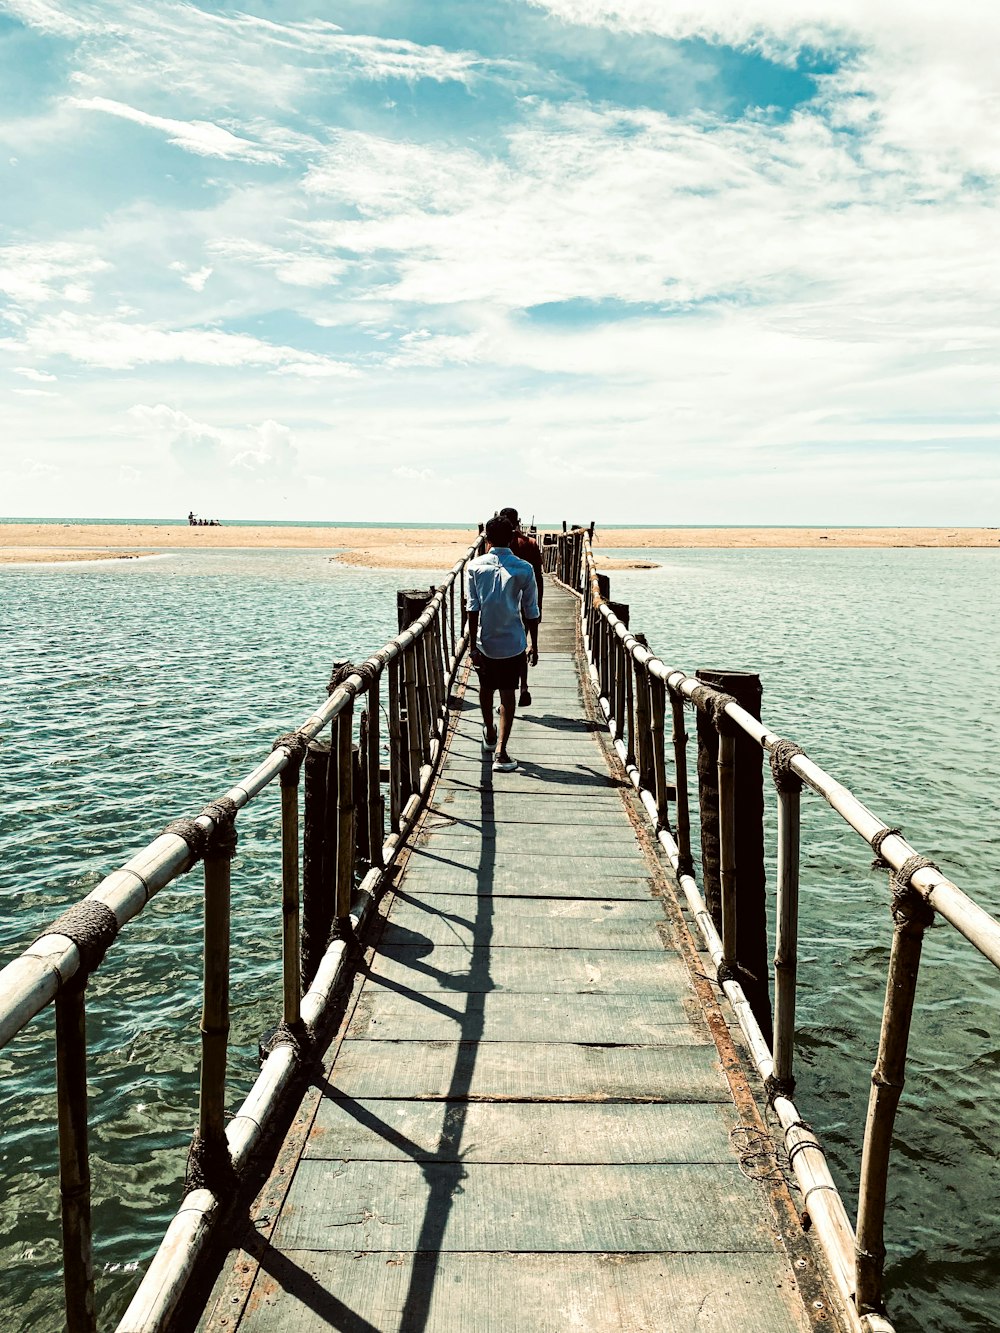 a man walking across a wooden bridge over a body of water